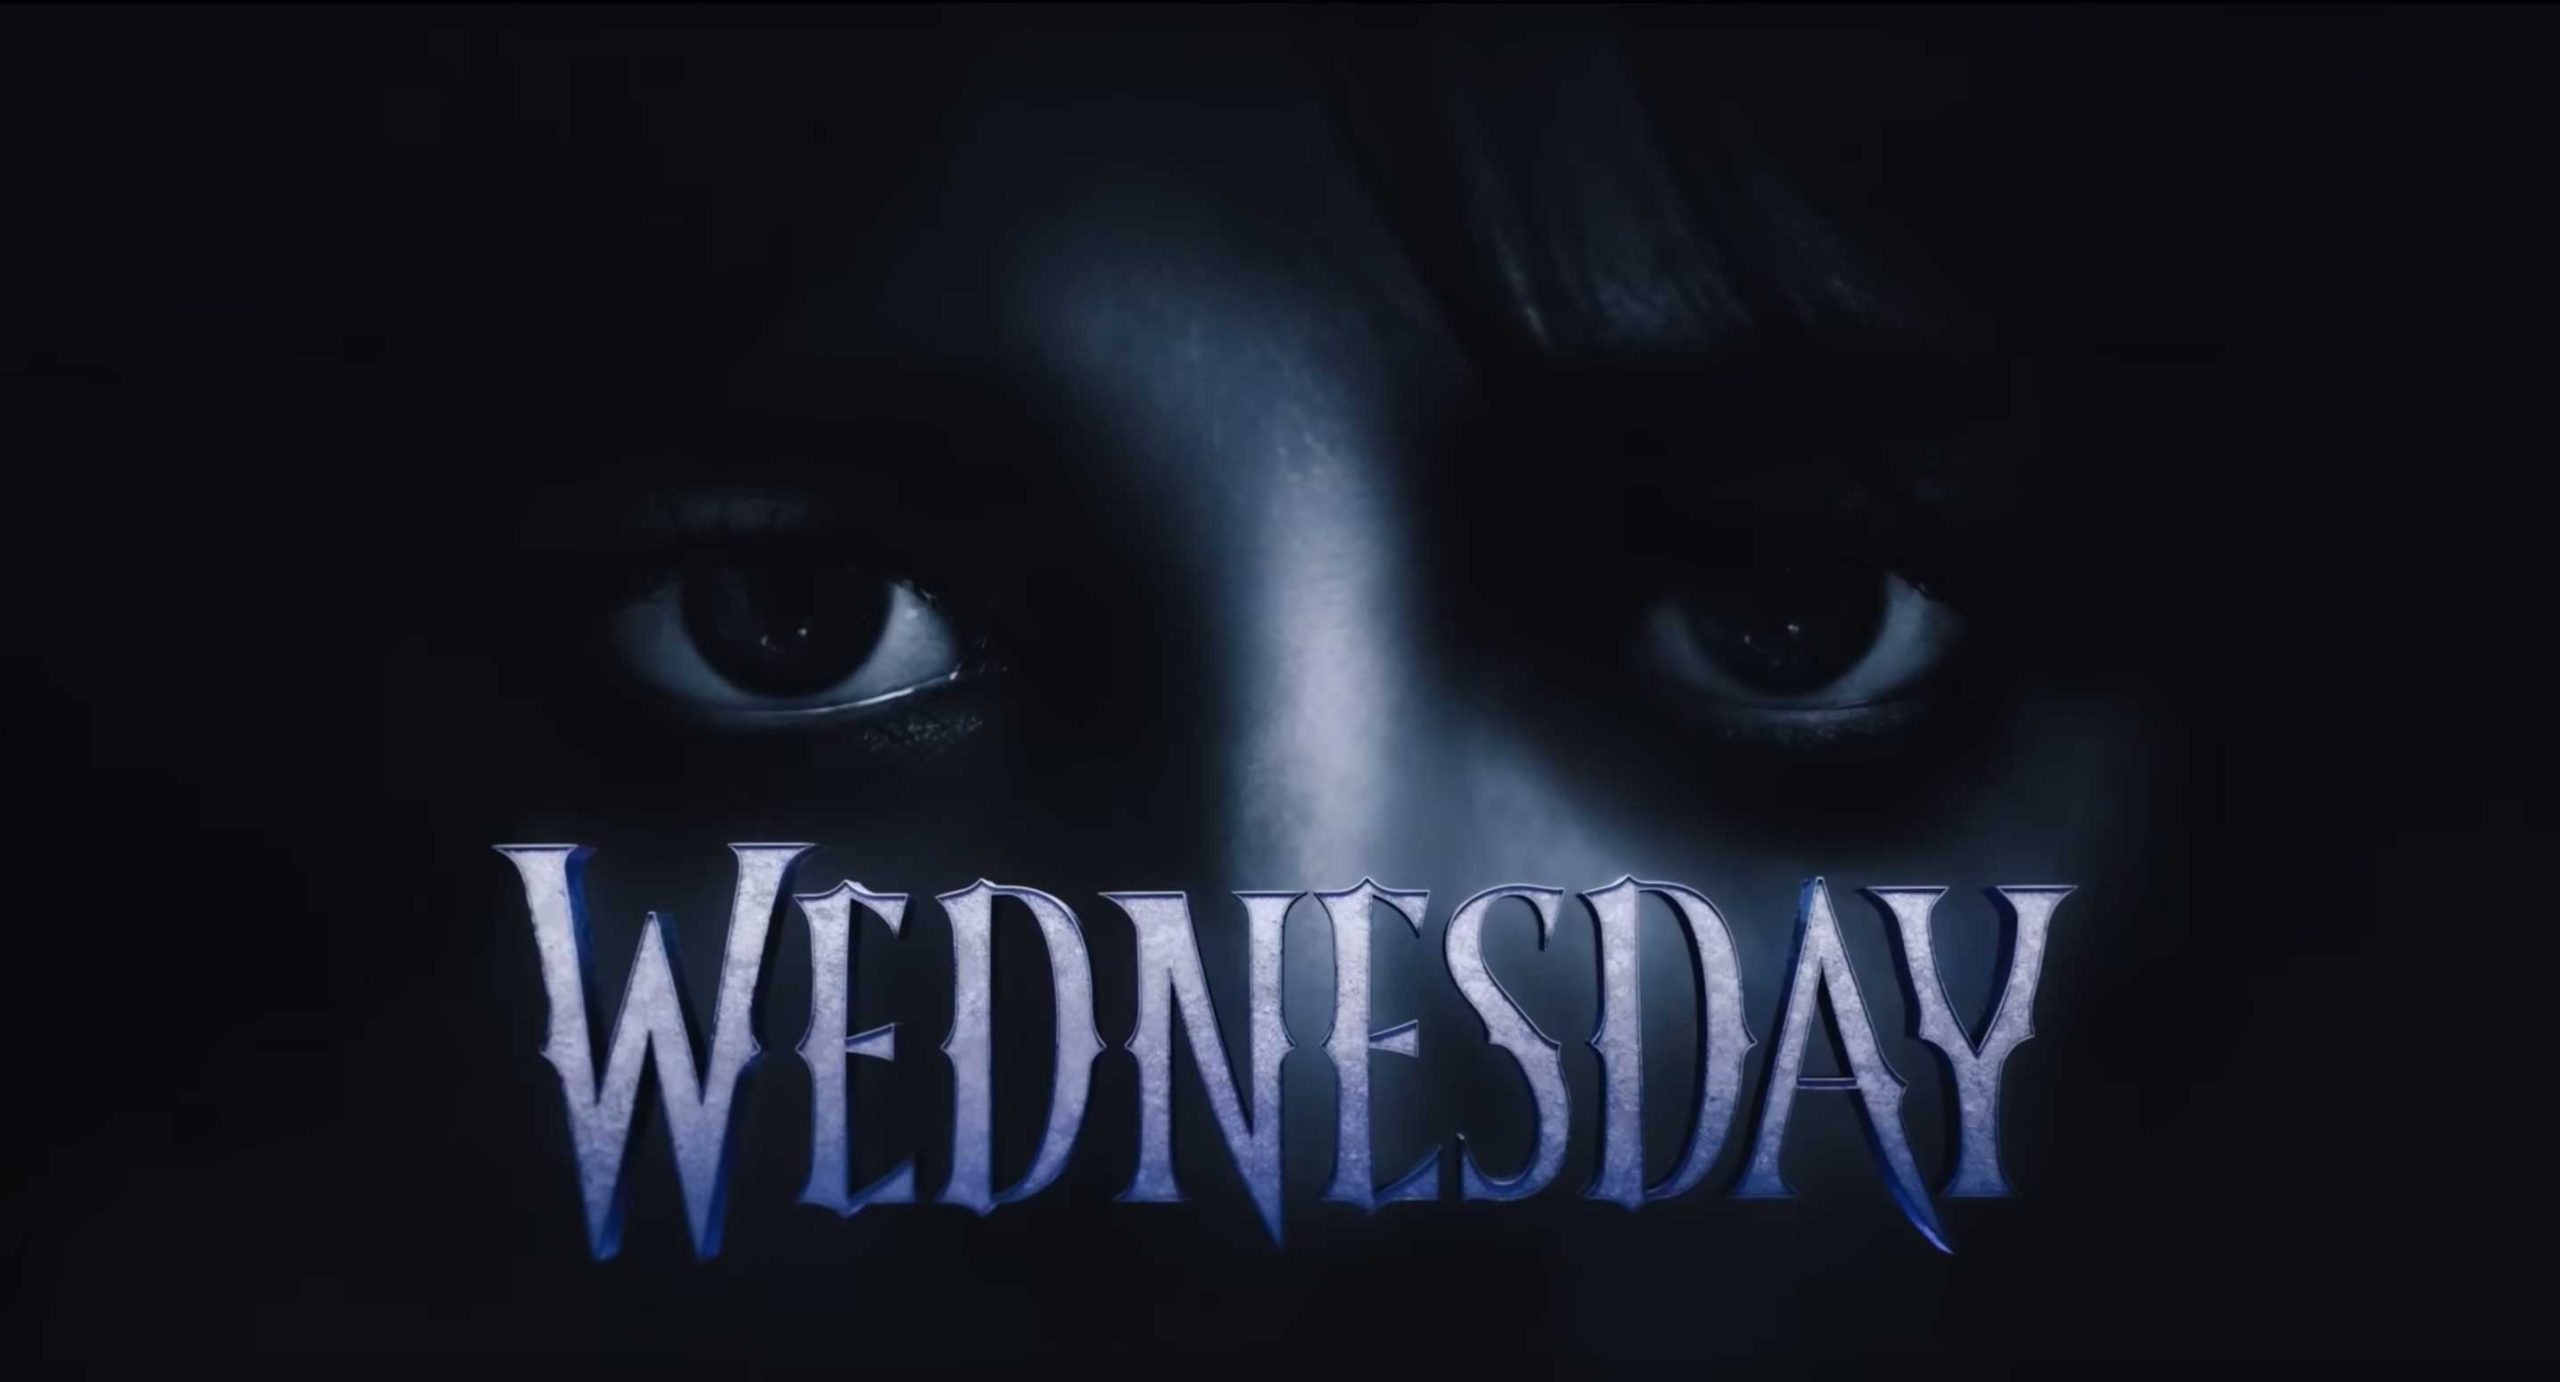 Wednesday Series Main Title Sequence Filmograph | STASH MAGAZINE